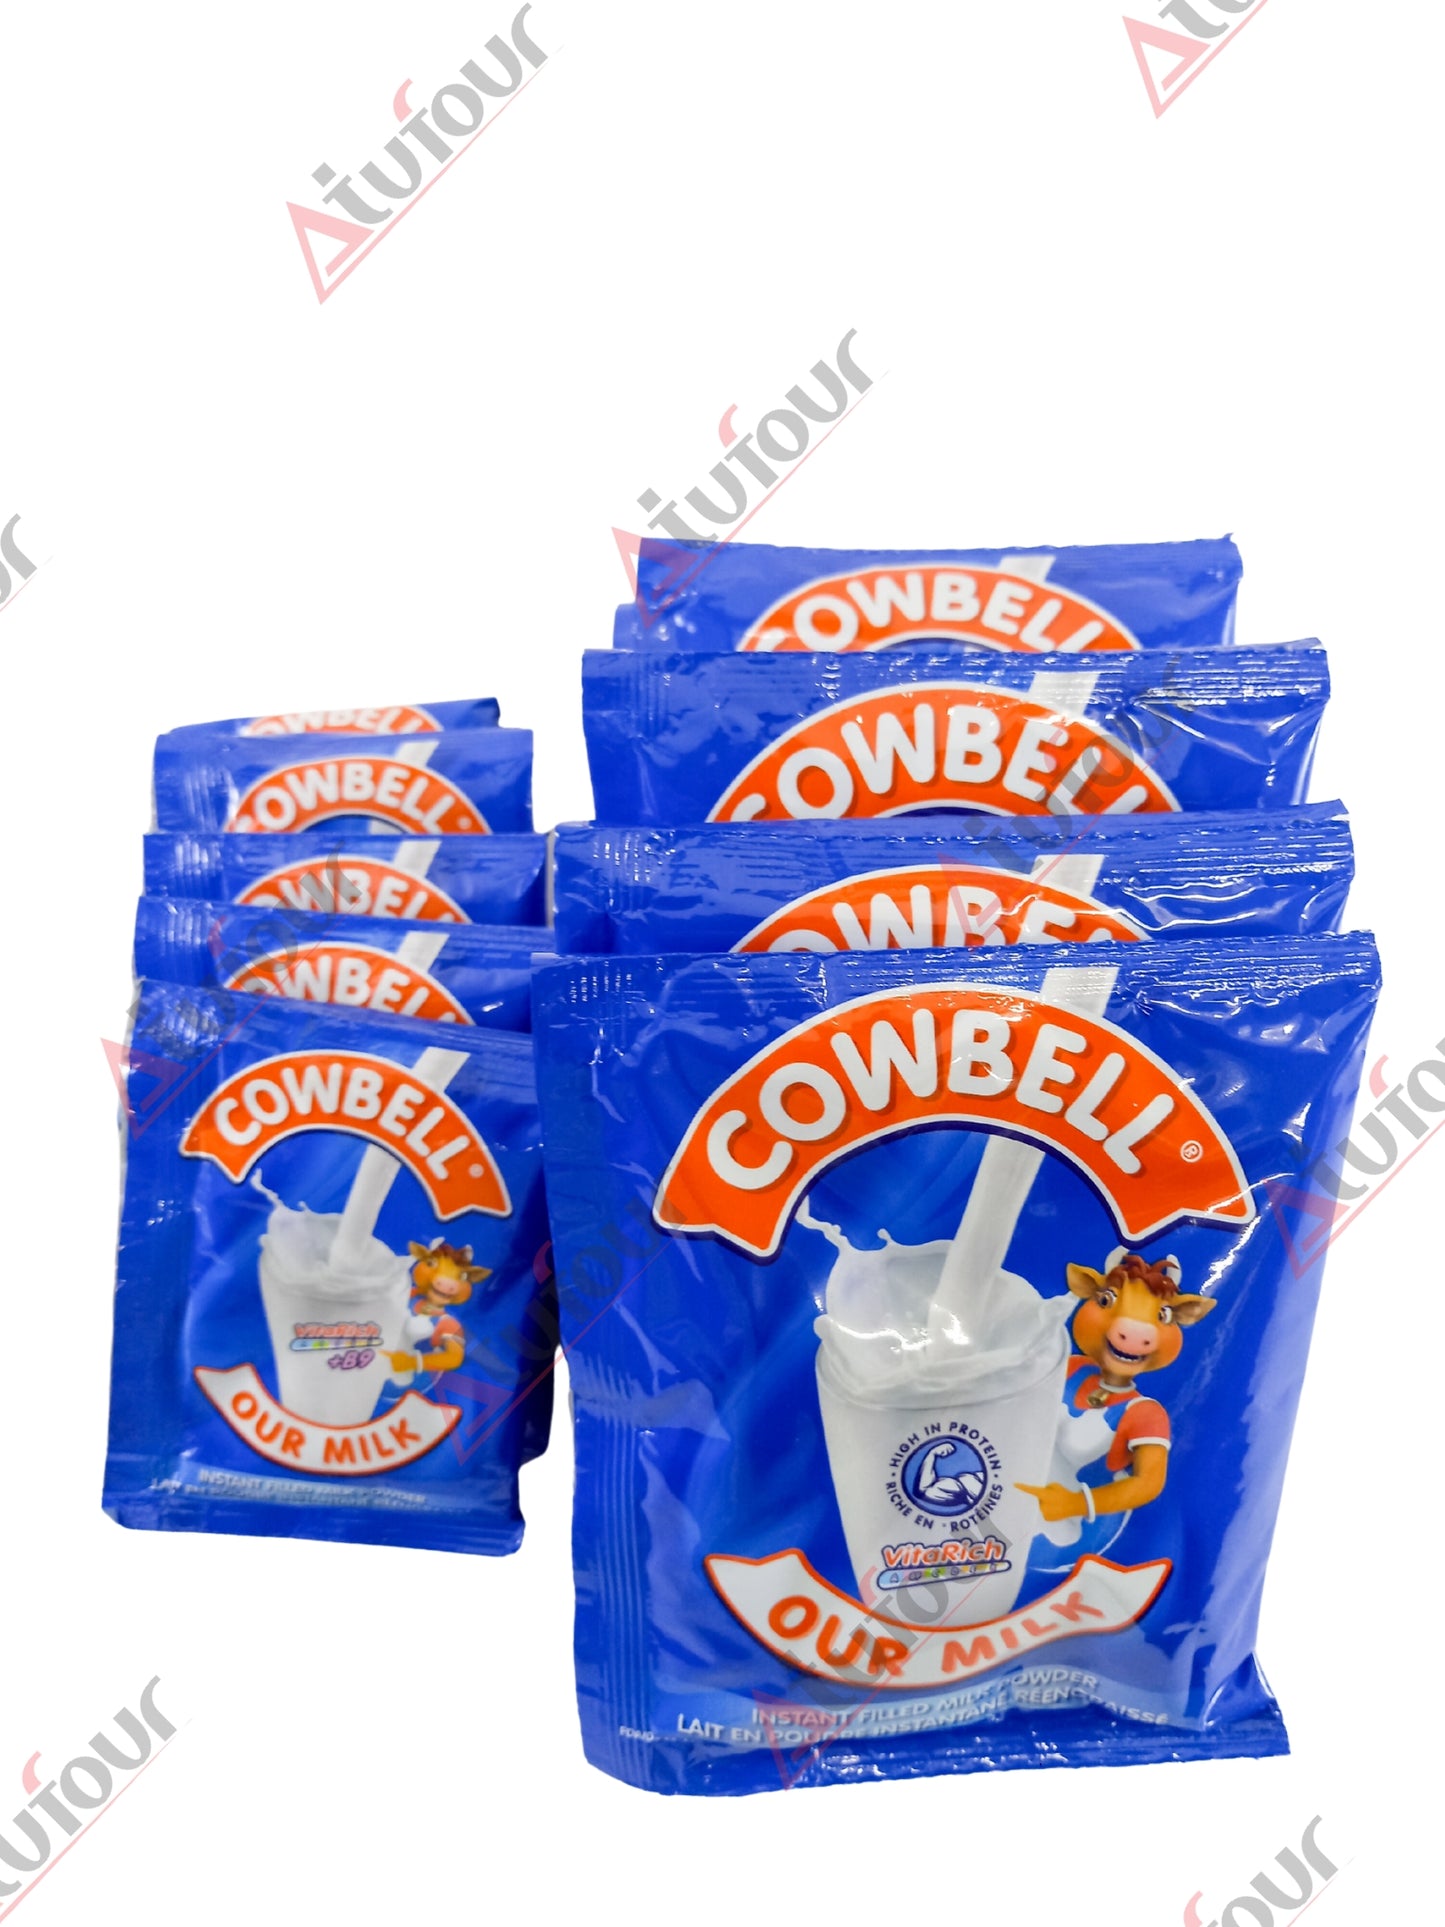 Cowbell Milk Powder Sachet 12g